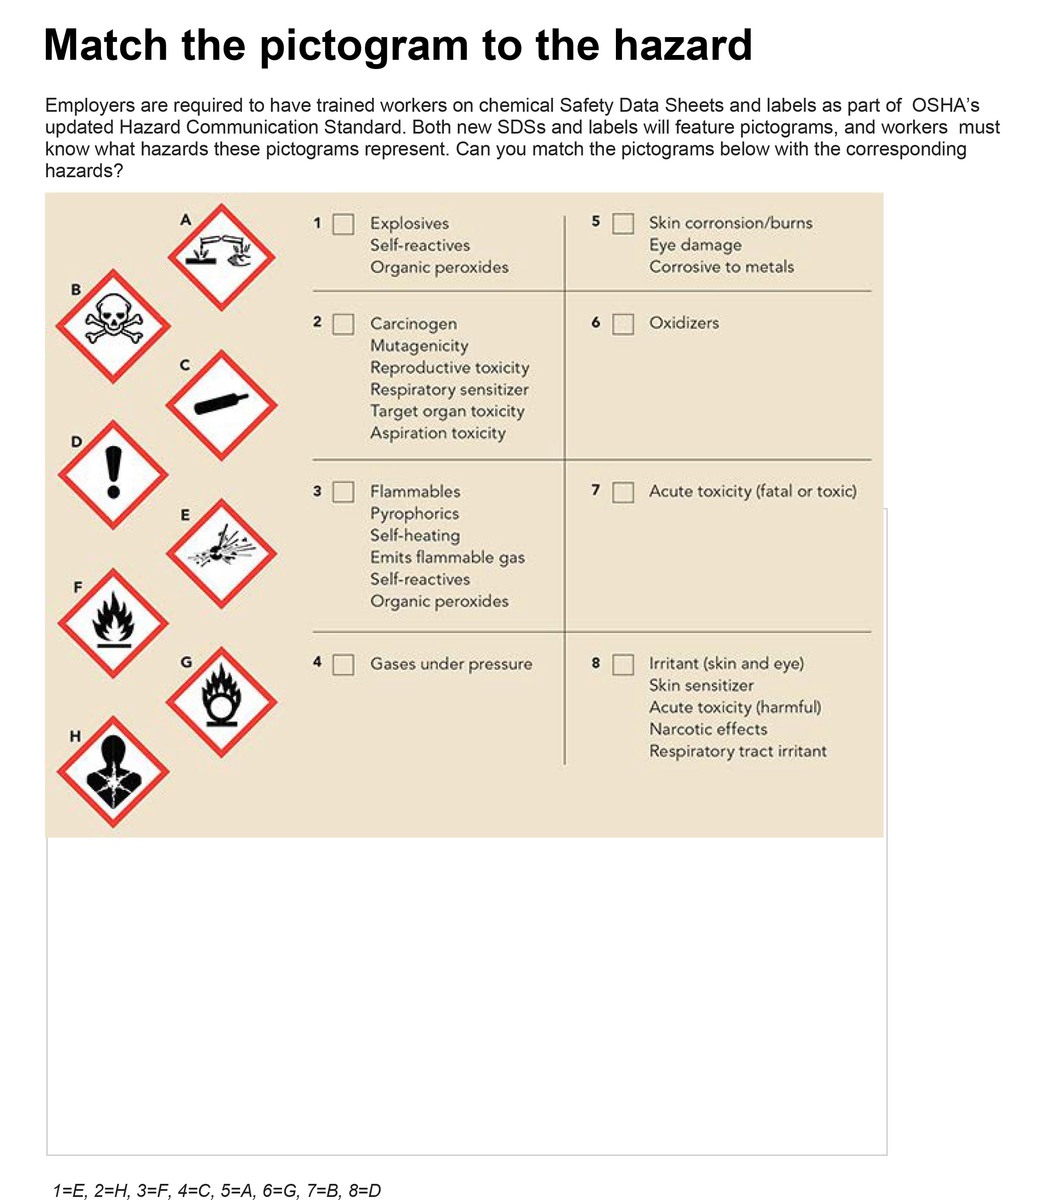 OSHA Hazards Pictogram | Employee OSHA pictograms training | Delphon